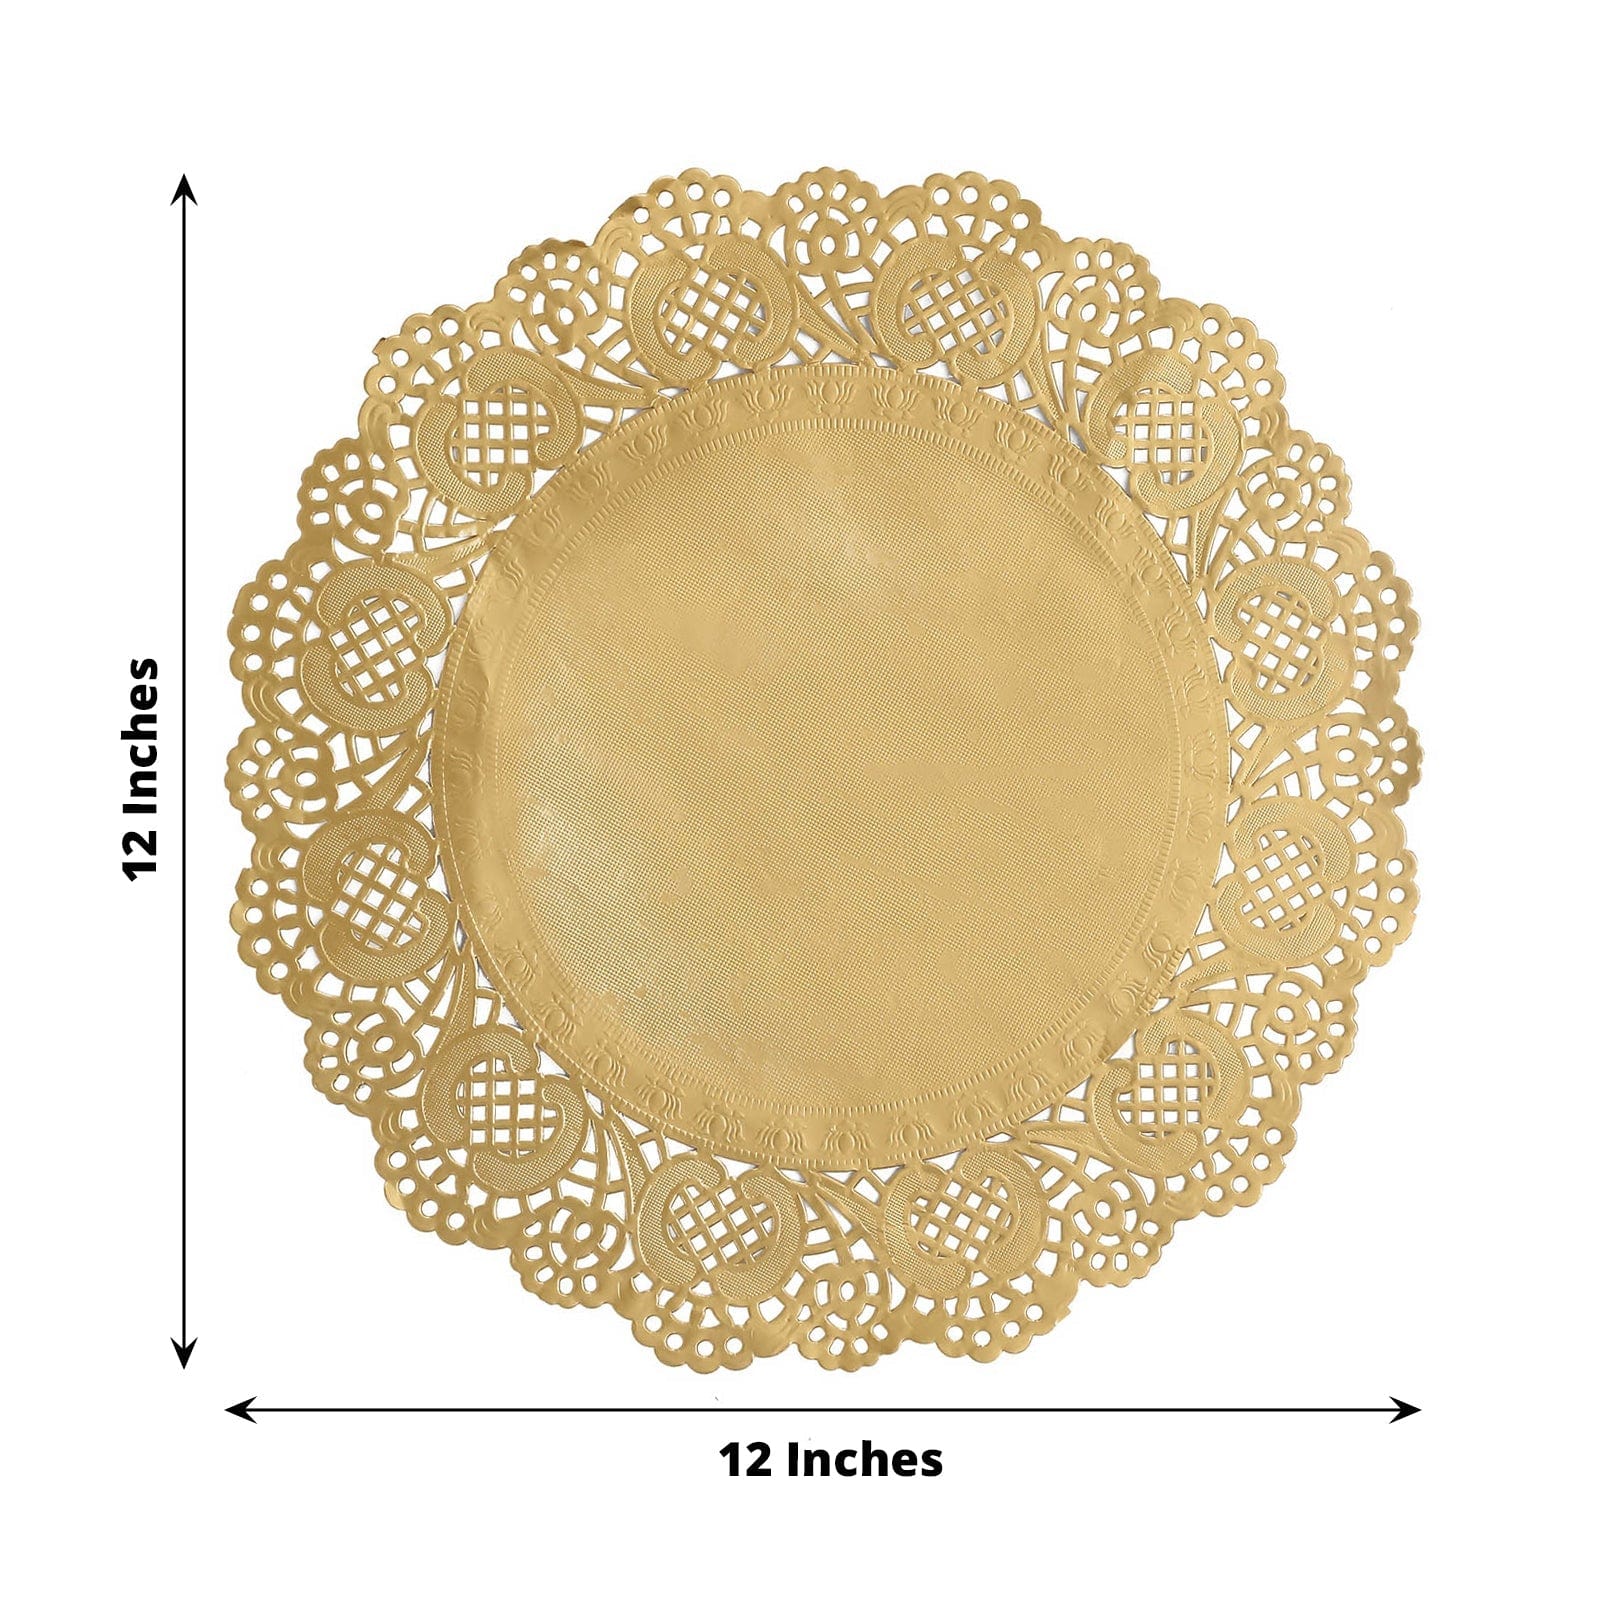 50 pcs Gold Round Disposable Paper Doilies Placemats with Lace Trim DSP_PPDOL_RND01_12_GOLD